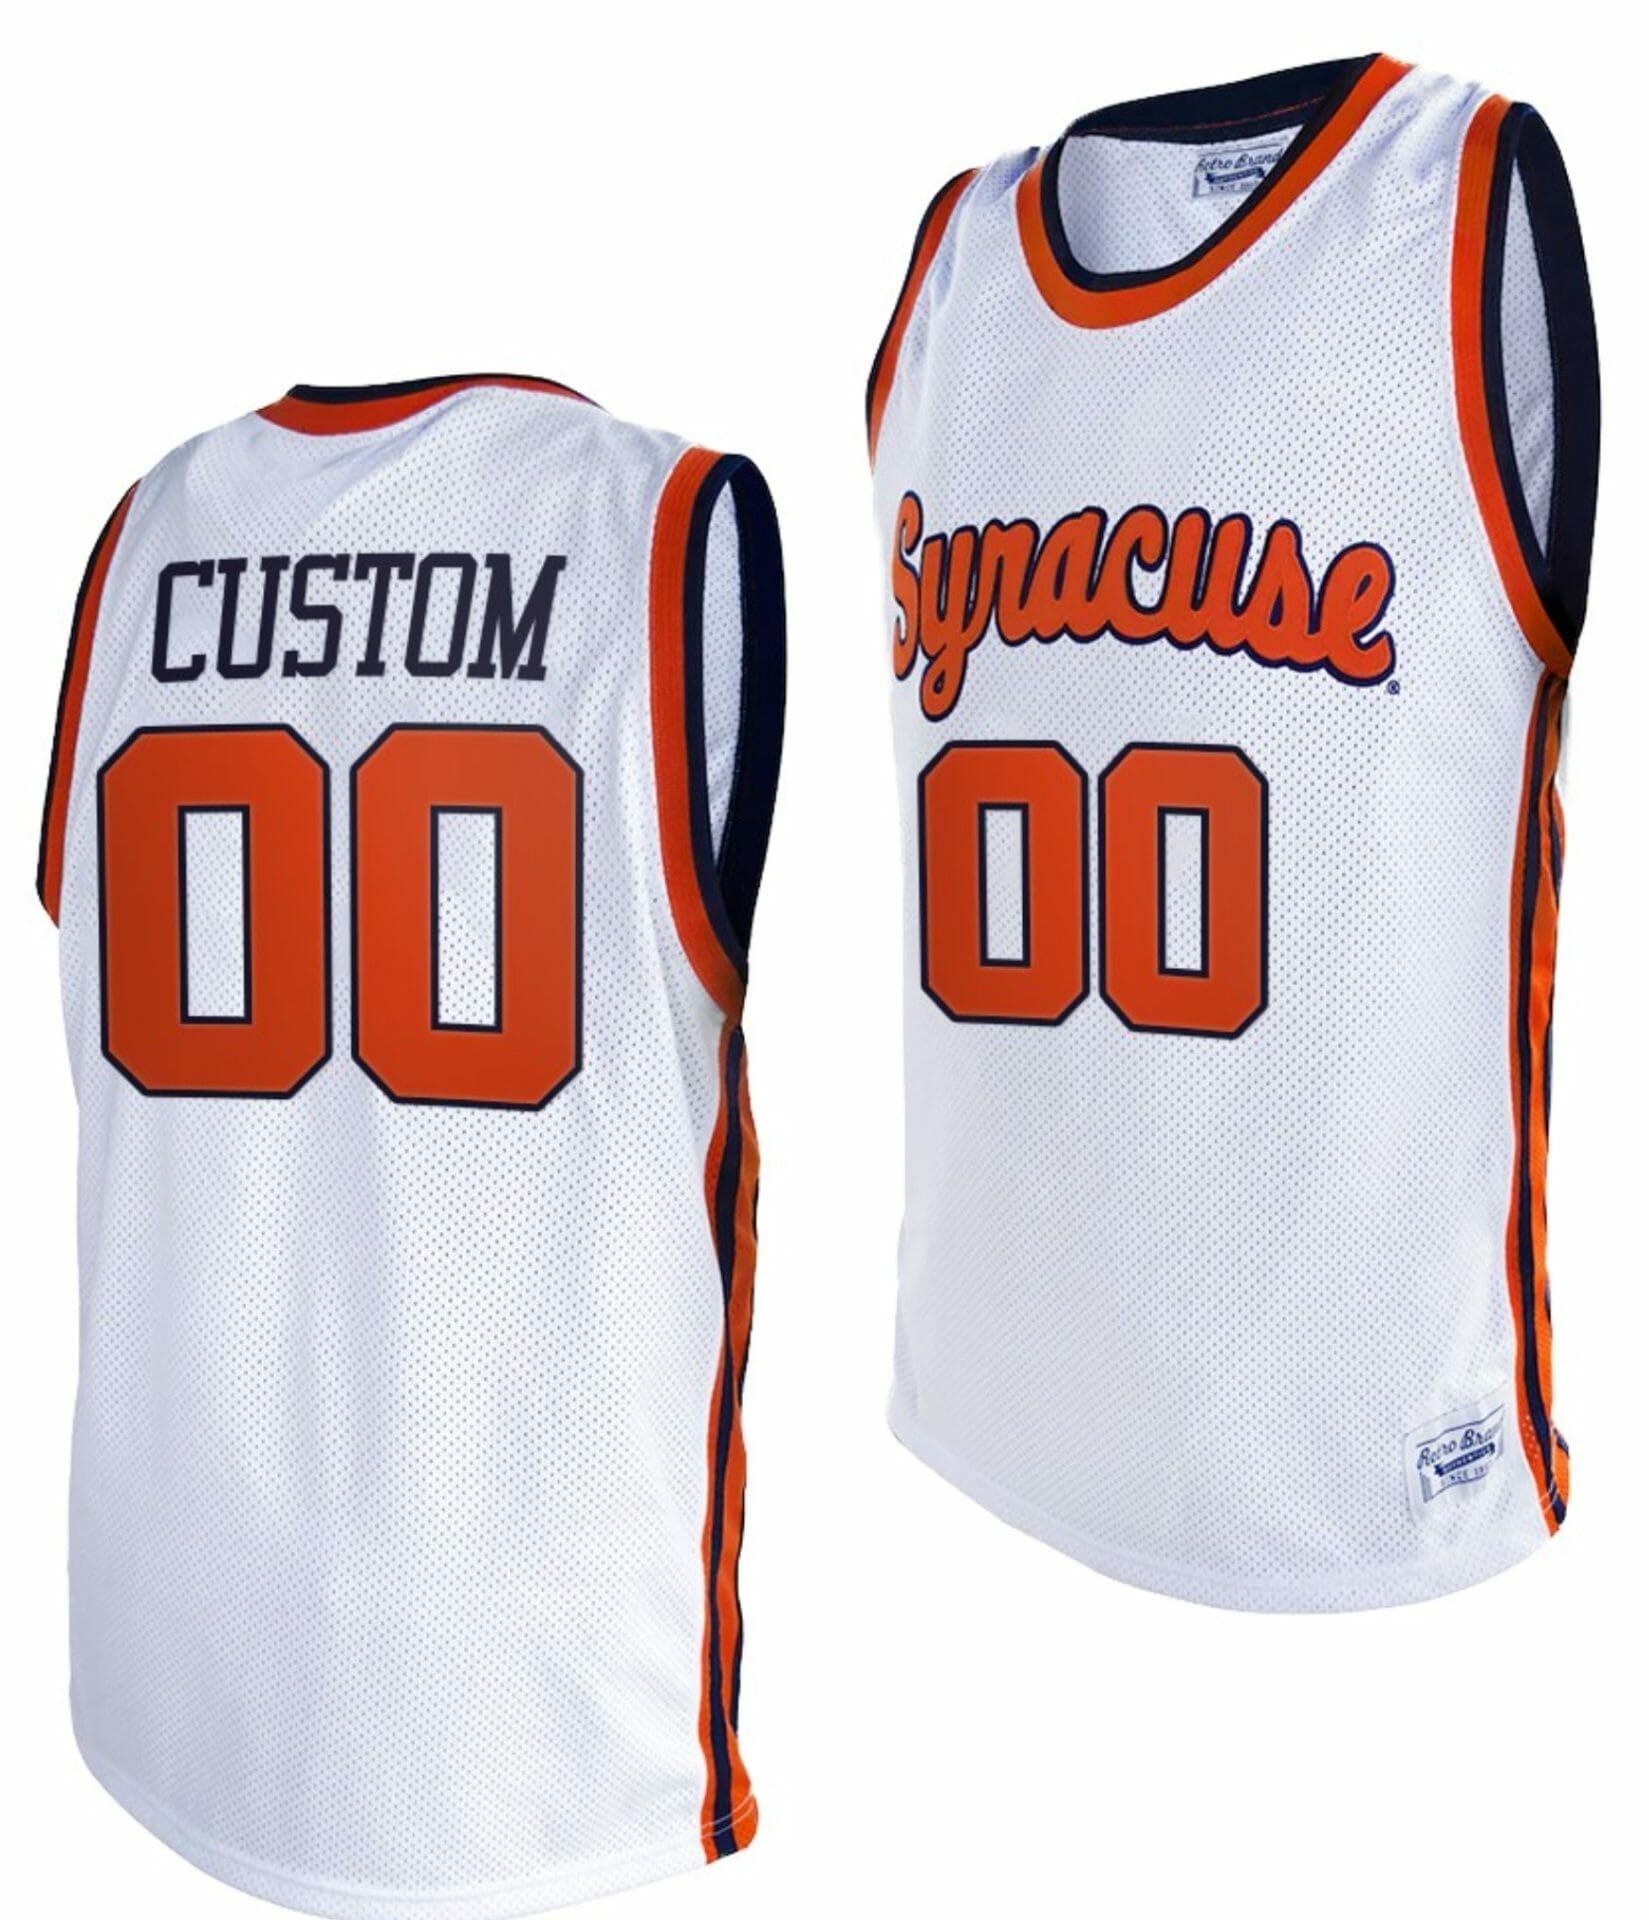 Su Men's Legacy Custom Basketball Uniform